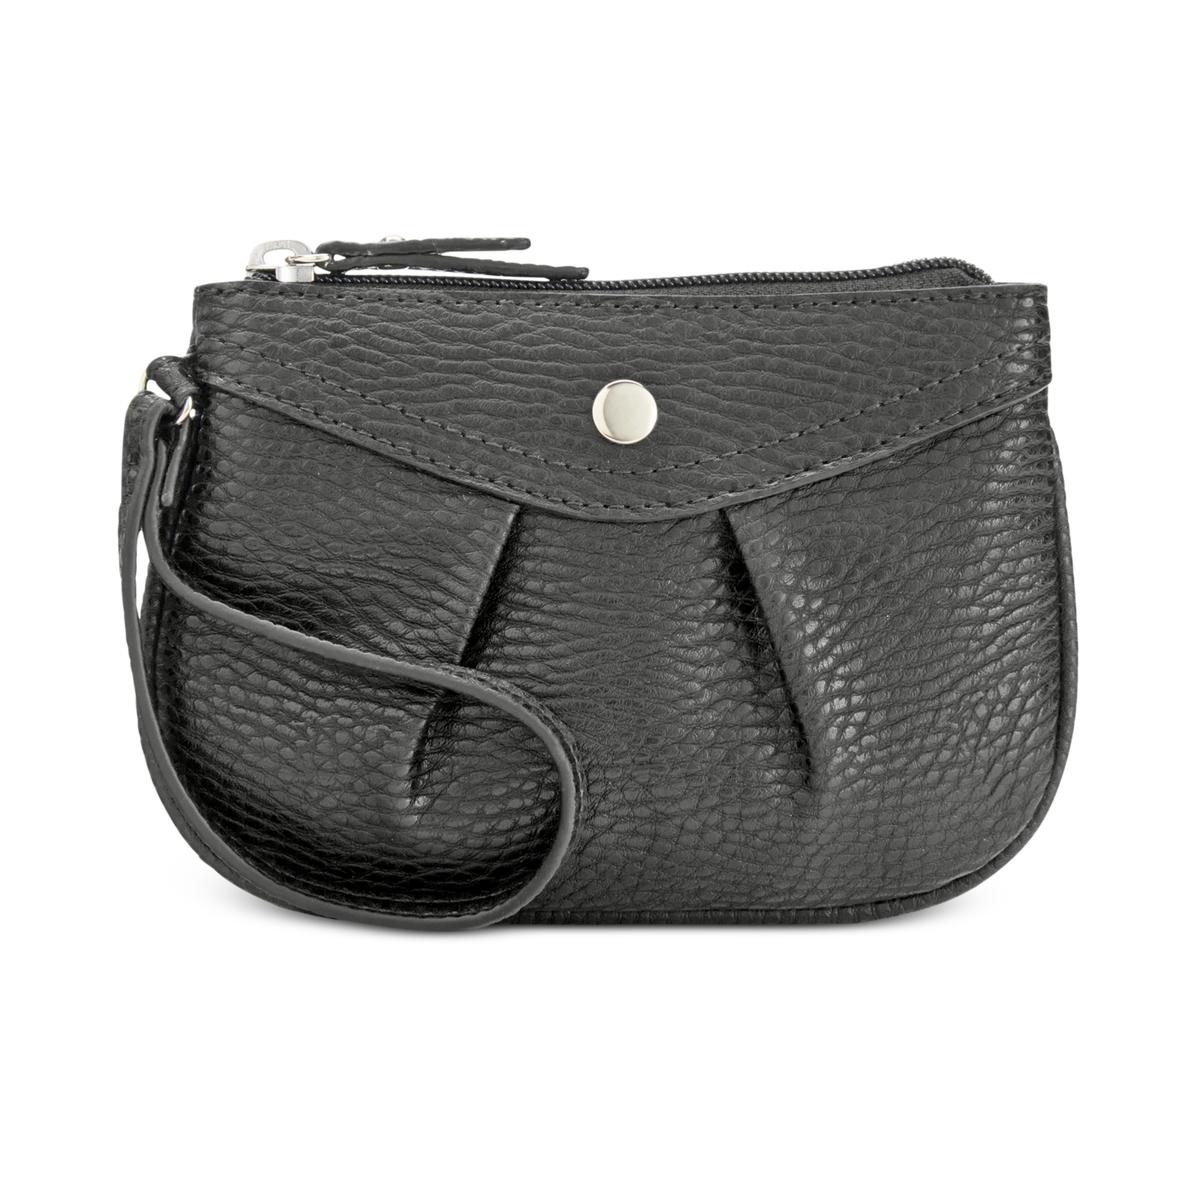 Style & Co. Womens Hannah Black Faux Leather Wristlet Coin Purse Small BHFO 4874 | eBay